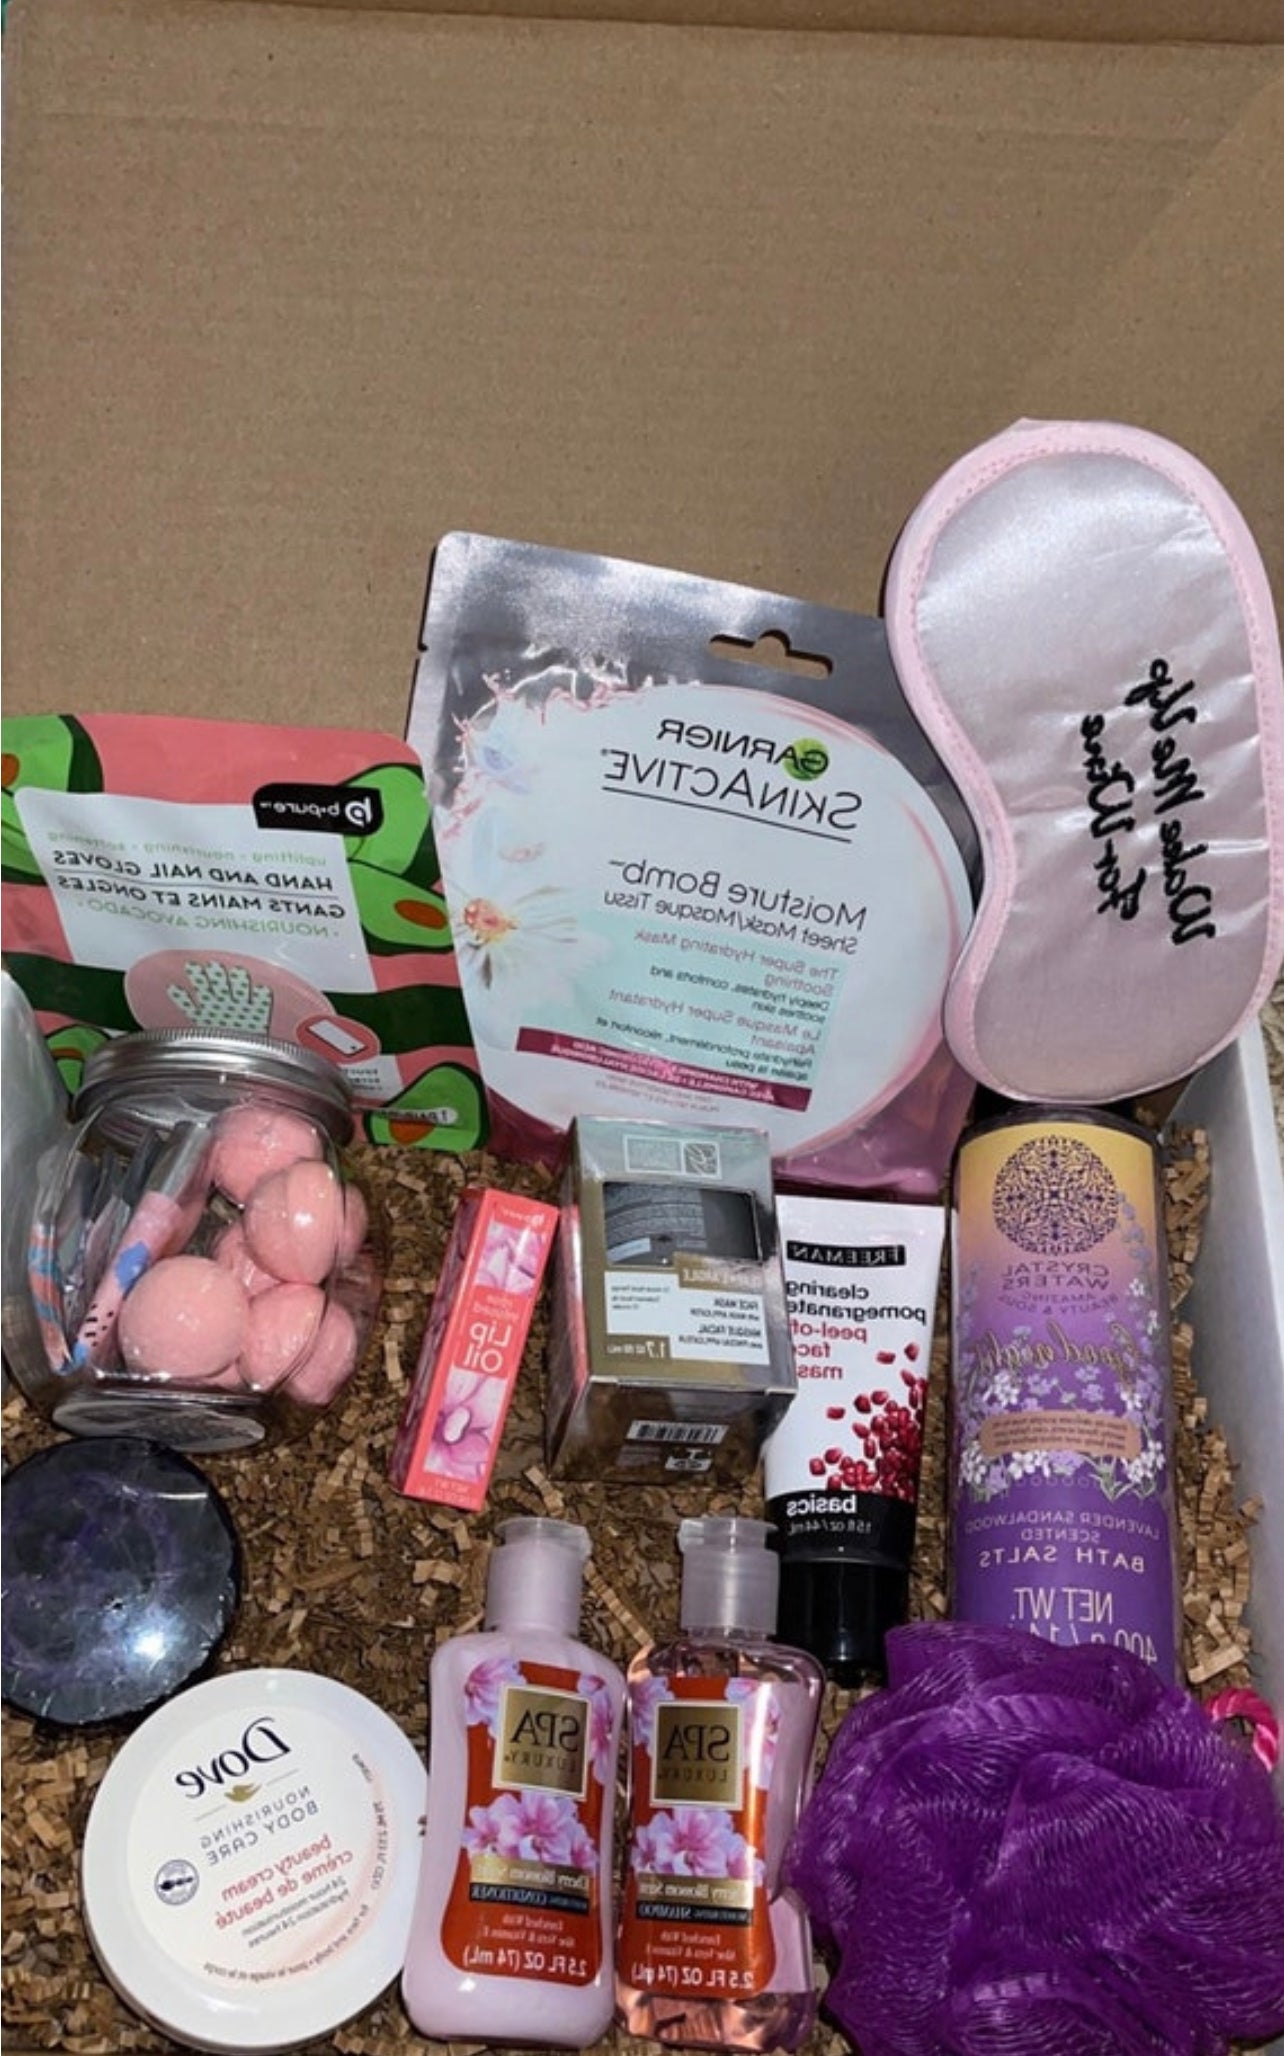 13 Pc body & bath spa gift set Box Valentine’s Day Birthday Shower Get well gift sets